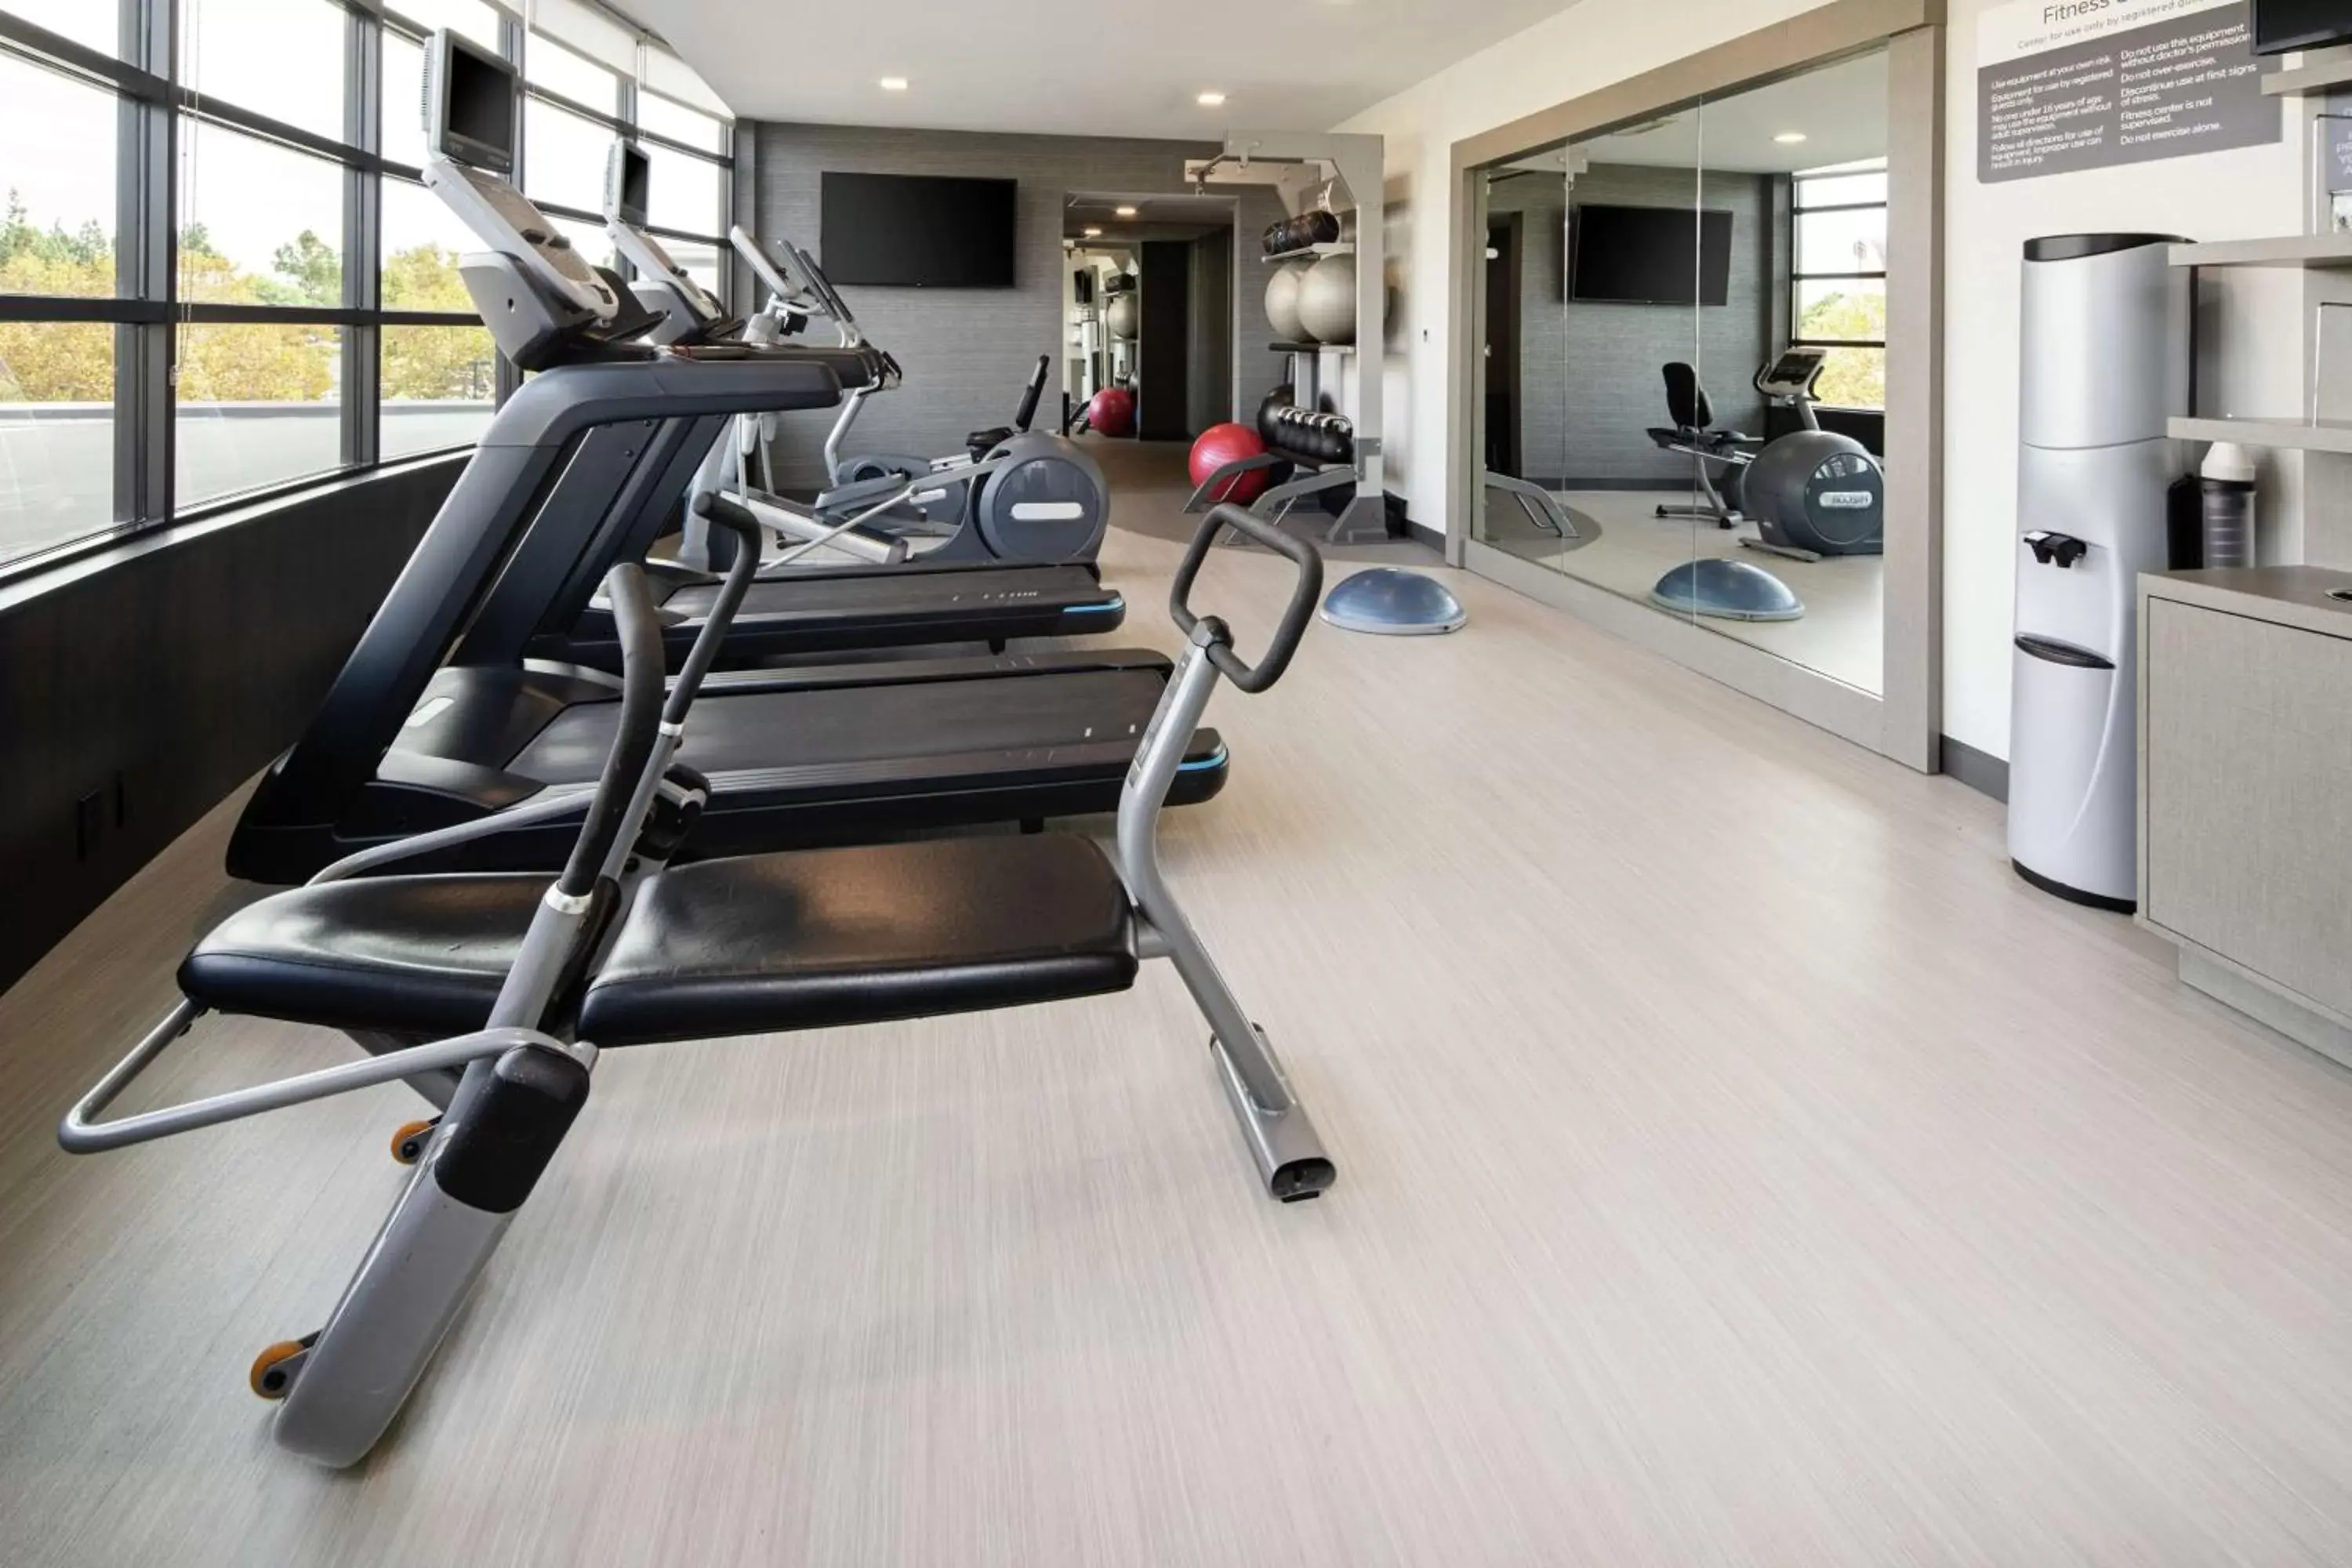 Fitness centre/facilities, Fitness Center/Facilities in Hilton Garden Inn Irvine Spectrum Lake Forest